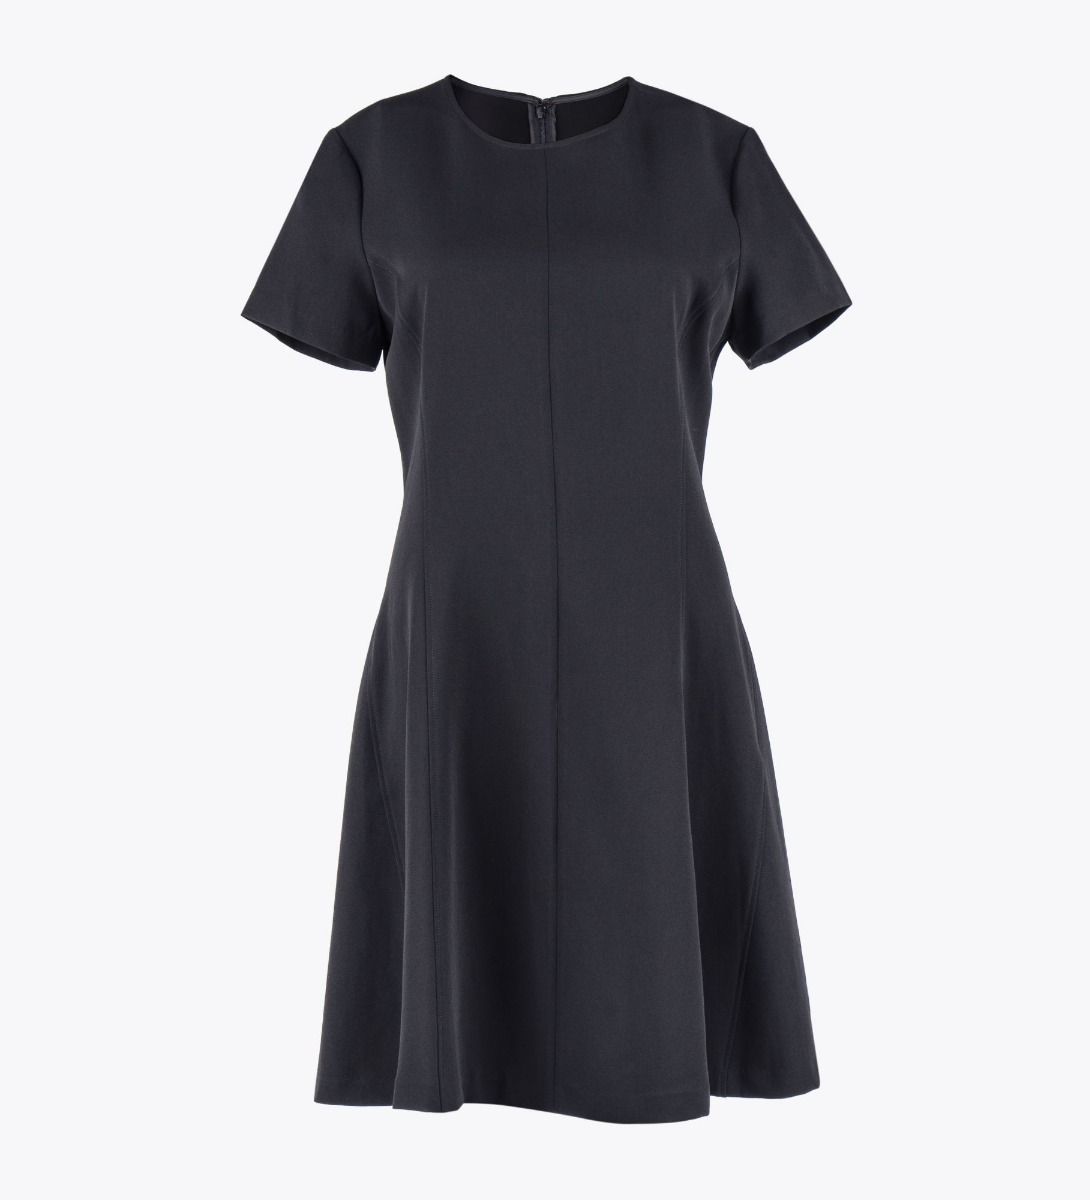 LEEZ Women Round Neck Short-Sleeve Flare Dress - Black